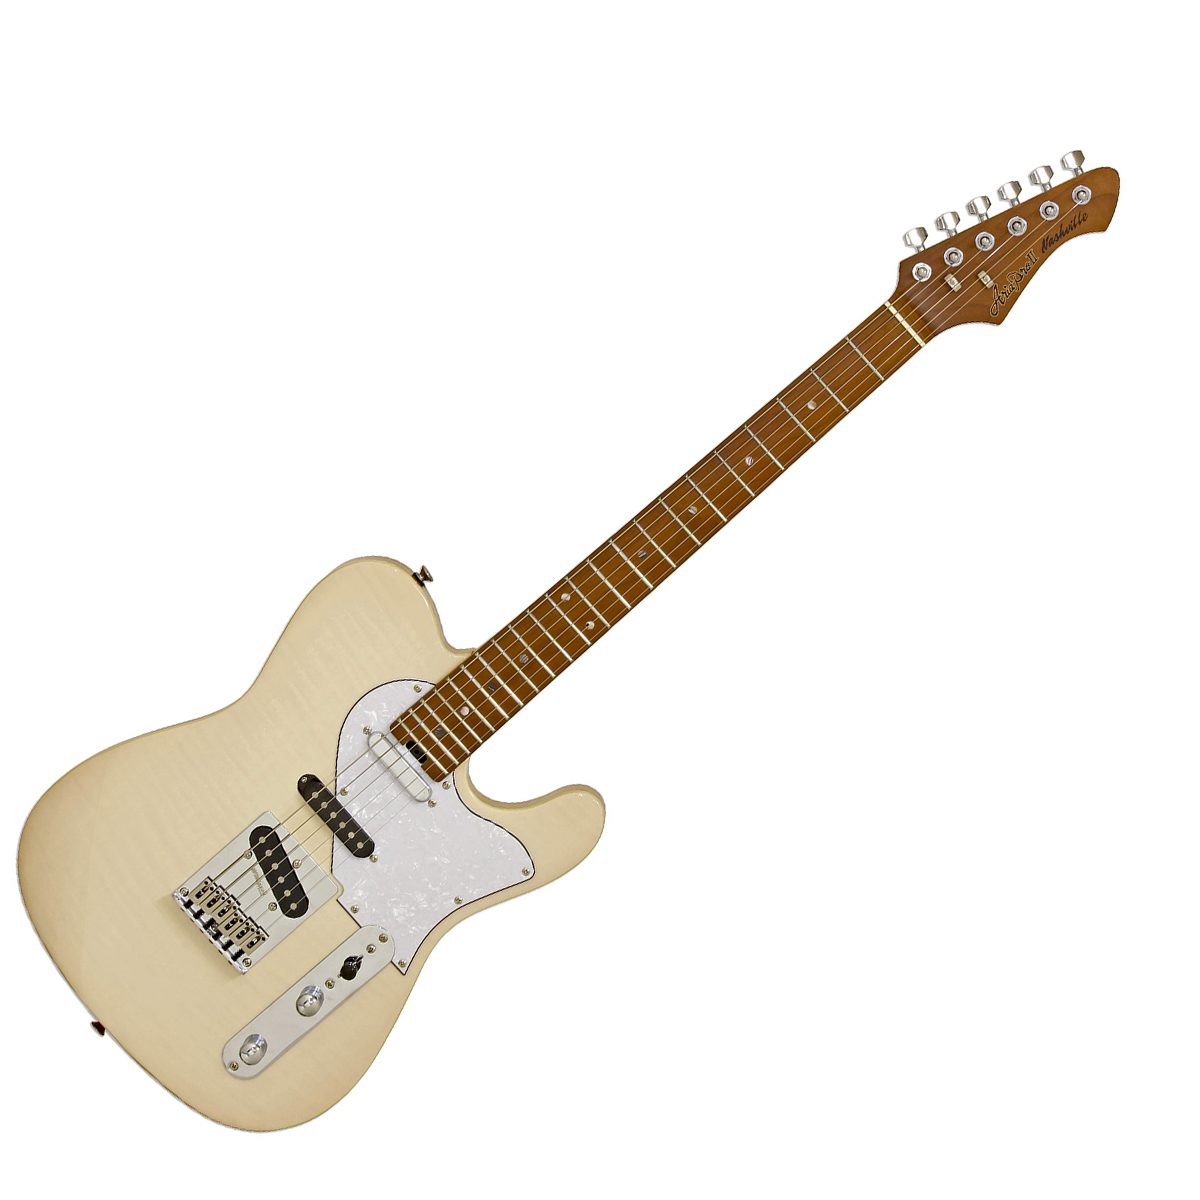 Aria 615 MK2 Nashville Electric Guitar - Marble White